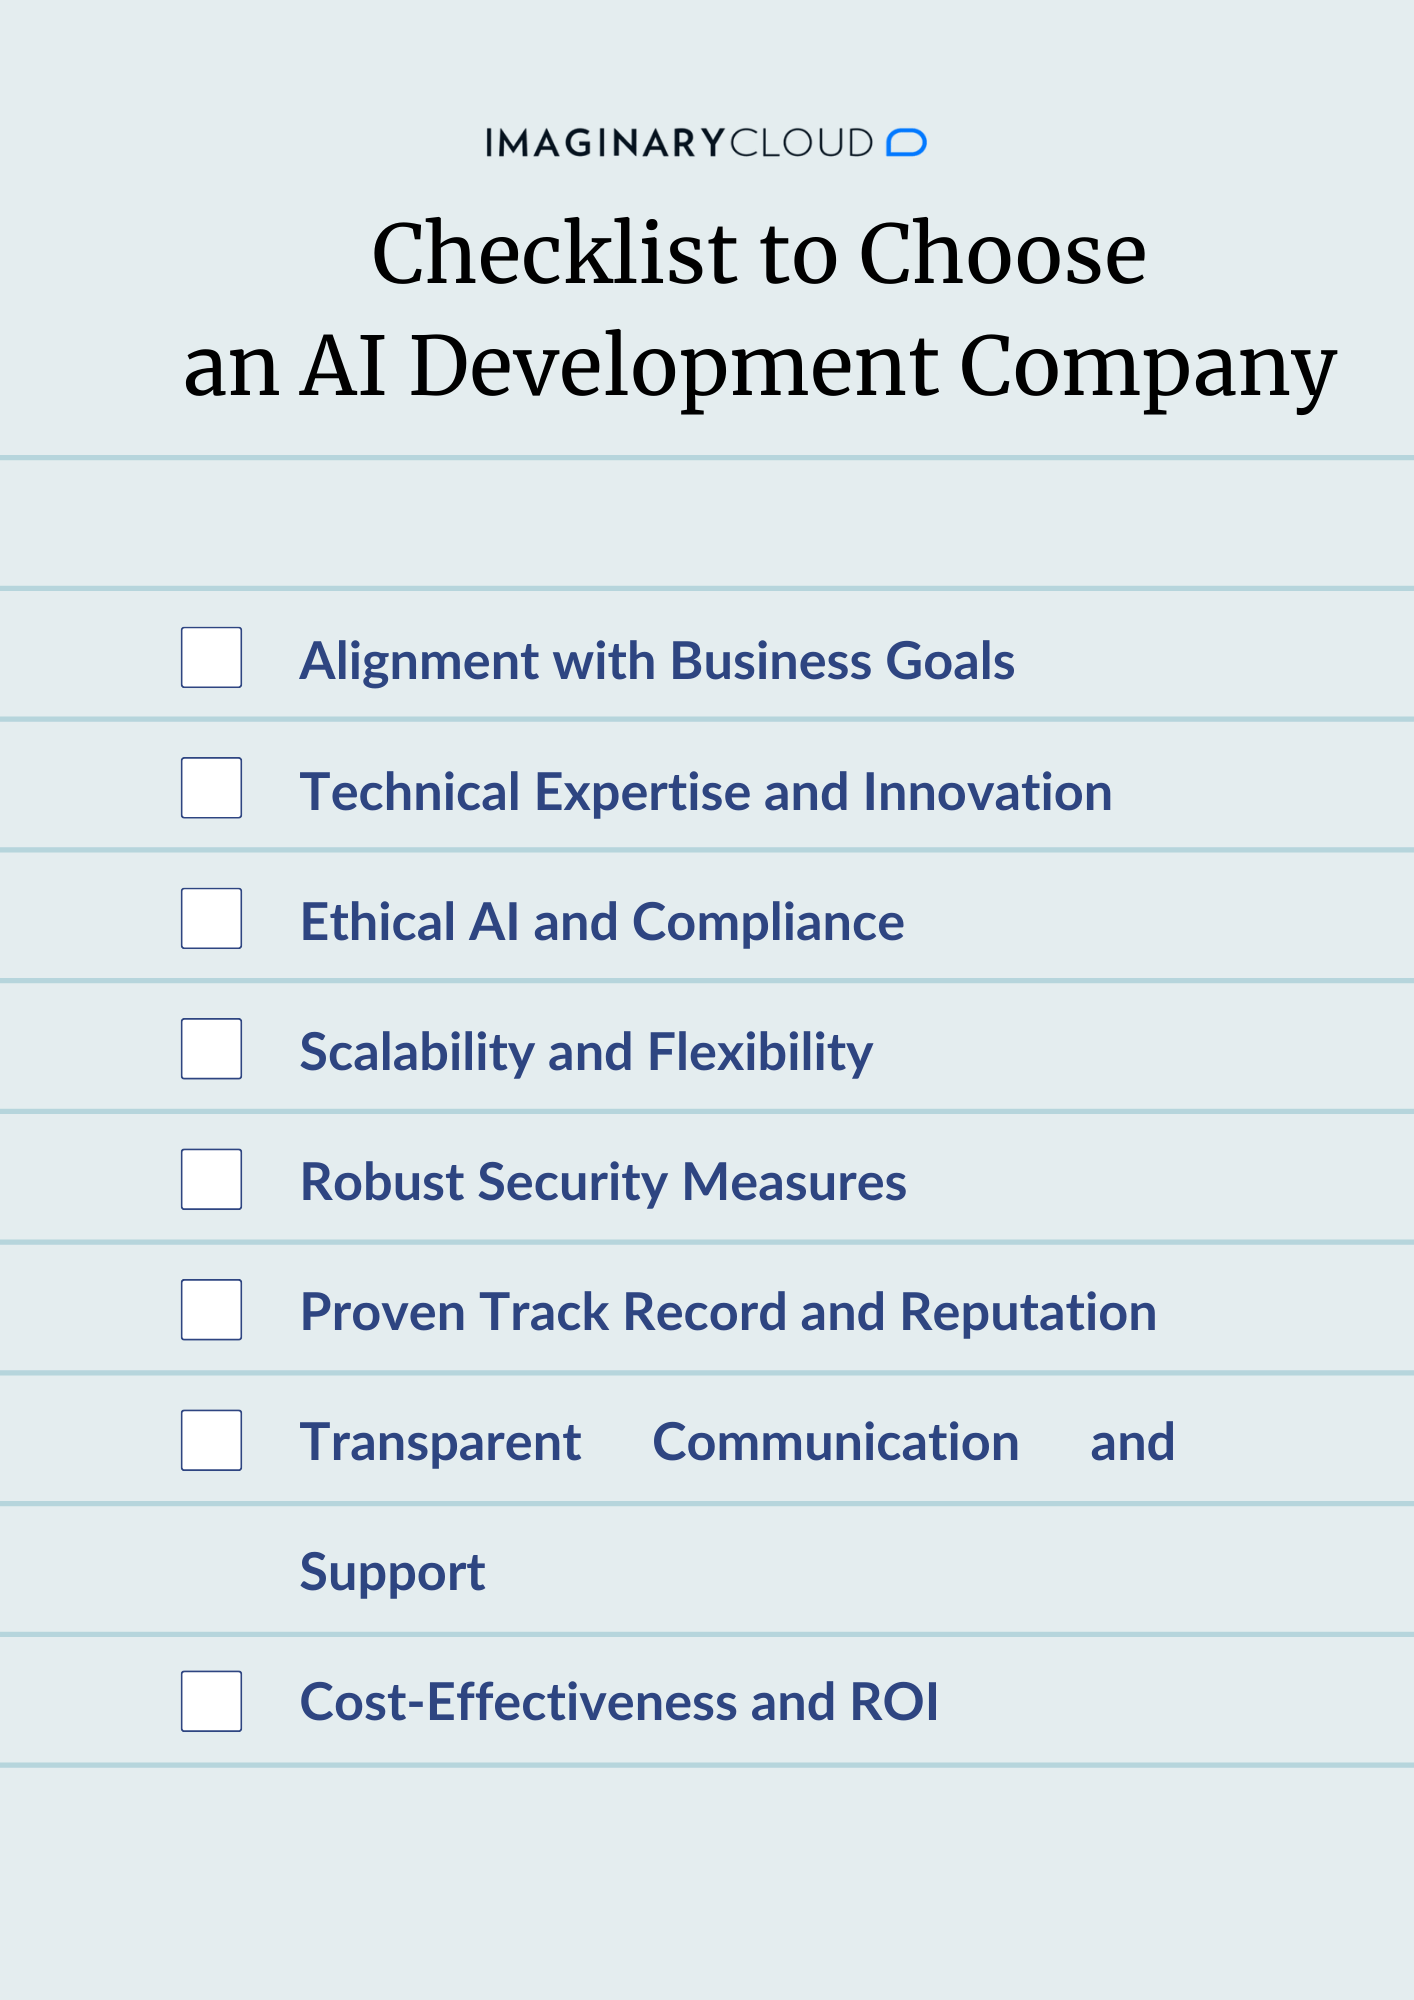 Checklist to choose an AI Development Company